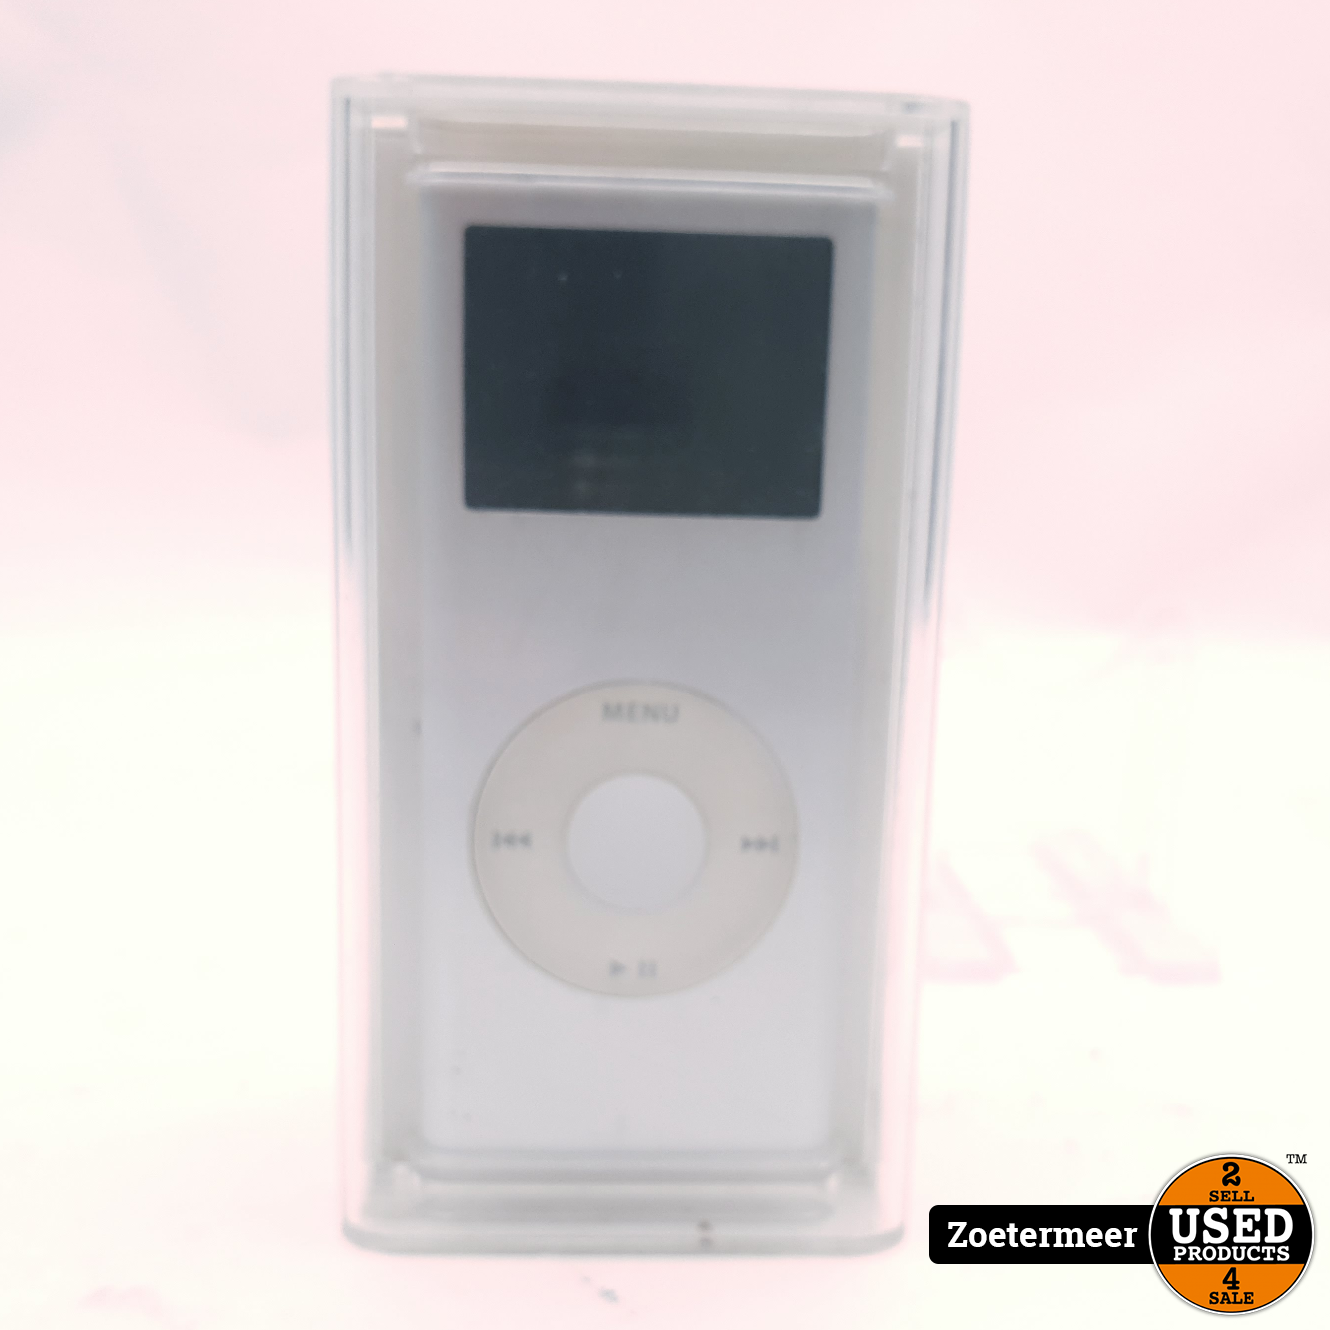 Apple iPod Nano - Used Products